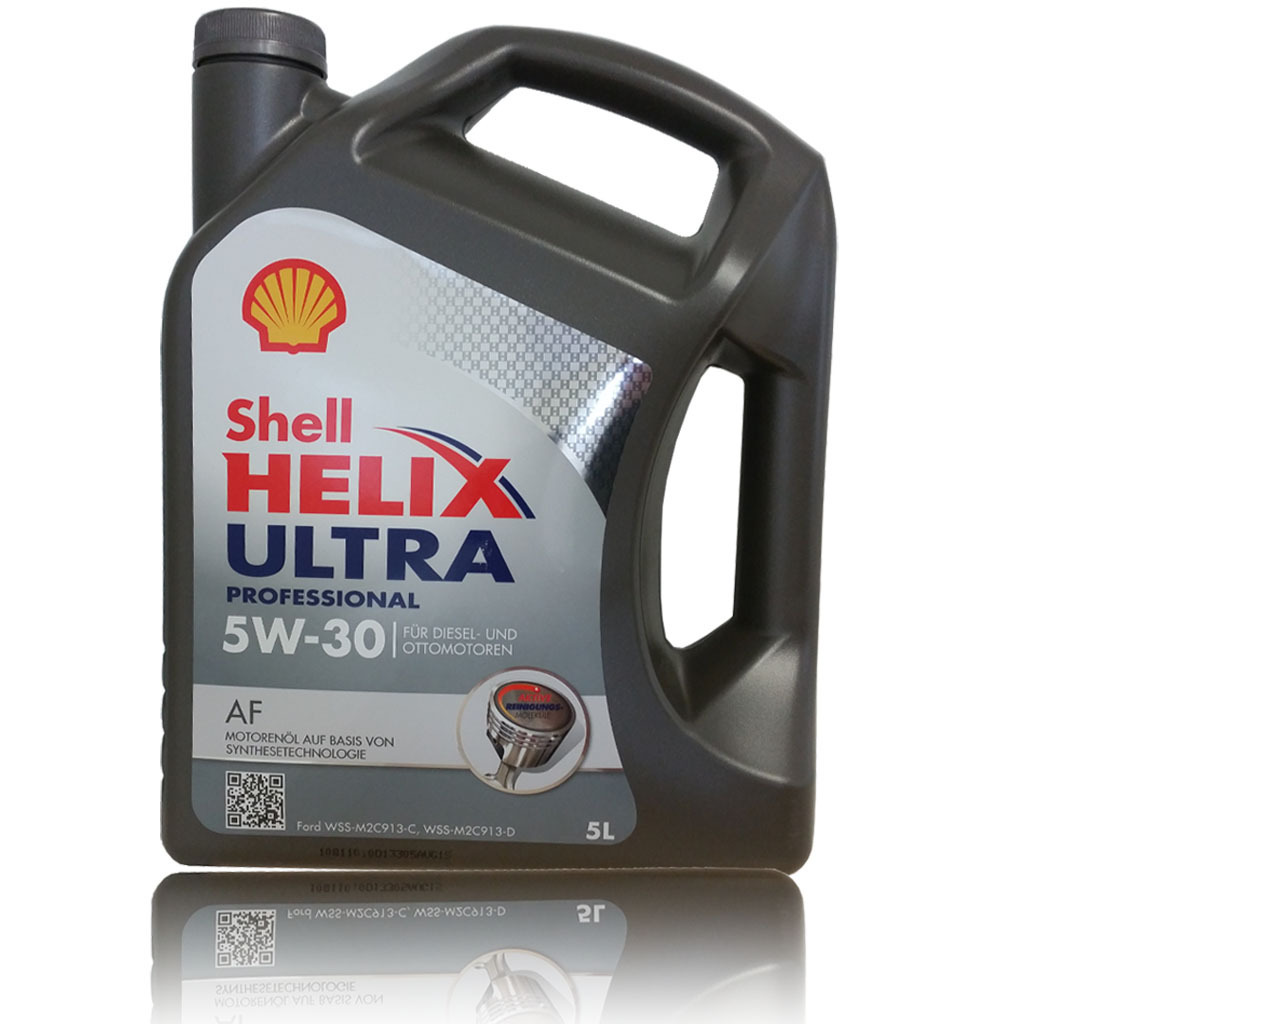 Api sl a5 b5. Shell Helix Ultra professional af 5w-30. Shell Helix Ultra Extra 5w30. Shell Helix Ultra 5w30 5л. Shell 5w30 a5.